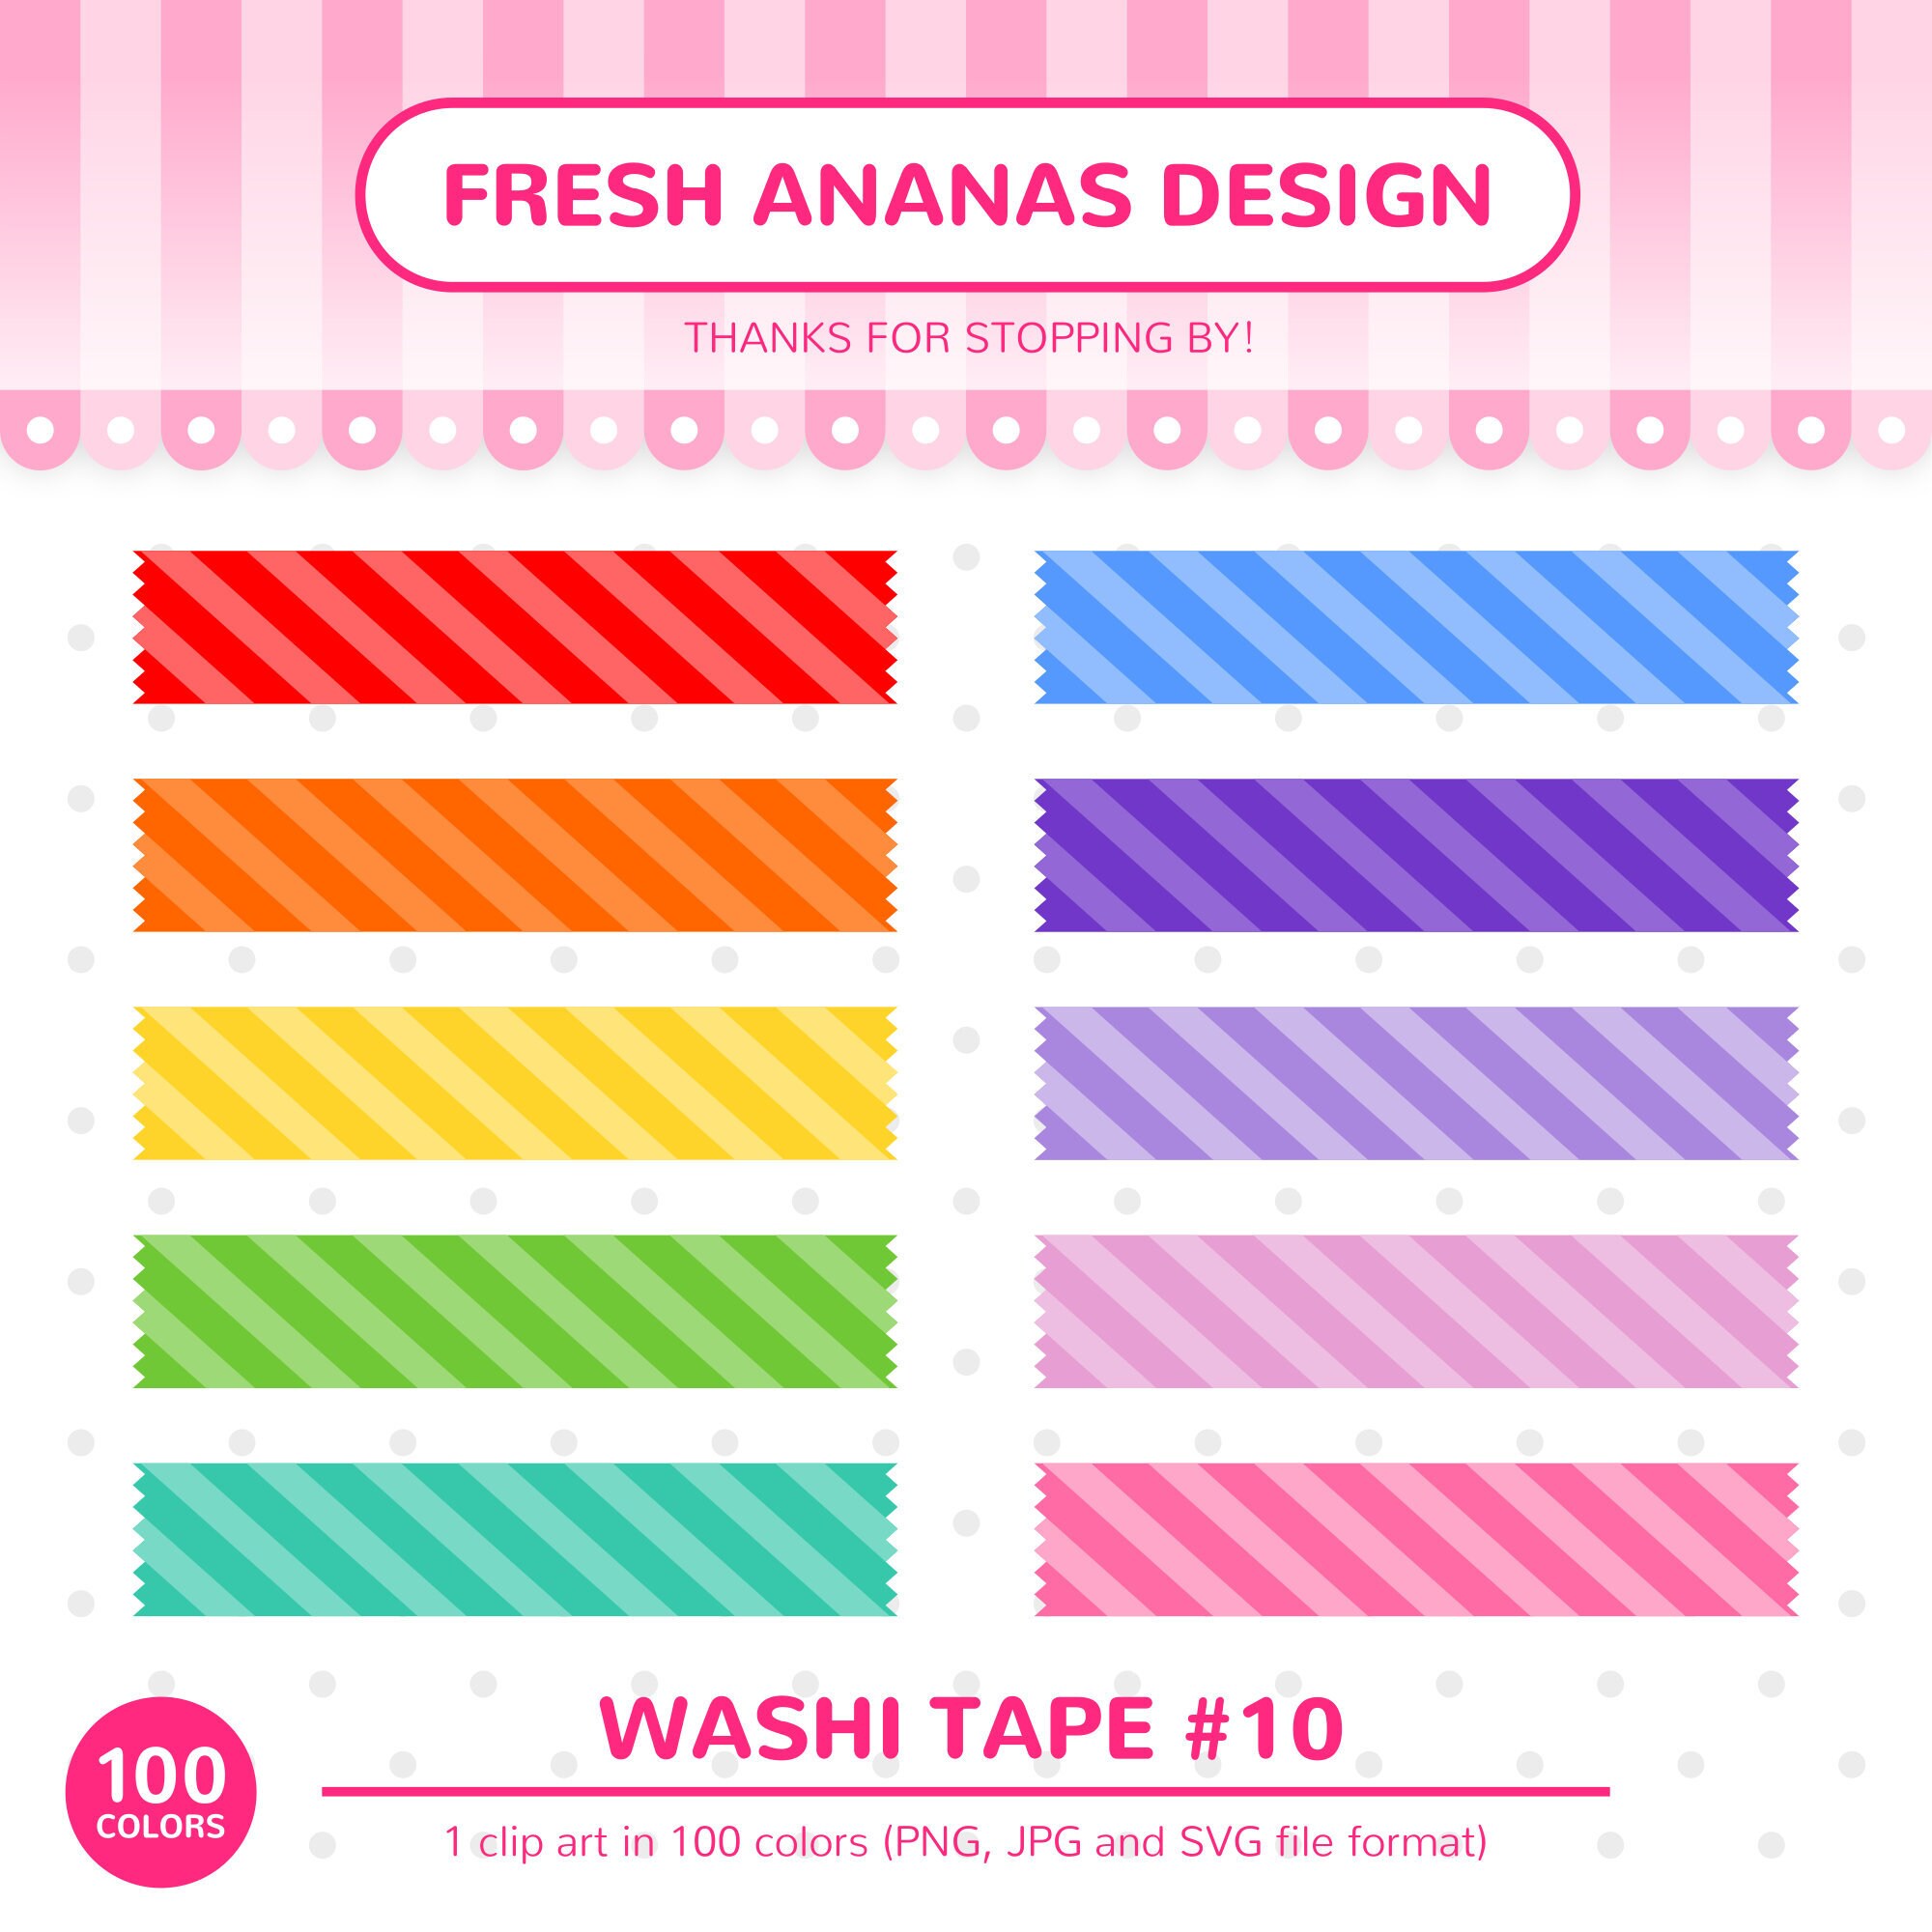 Digital Washi Tape Sticker, Washi Tape Clipart, Digital Planner